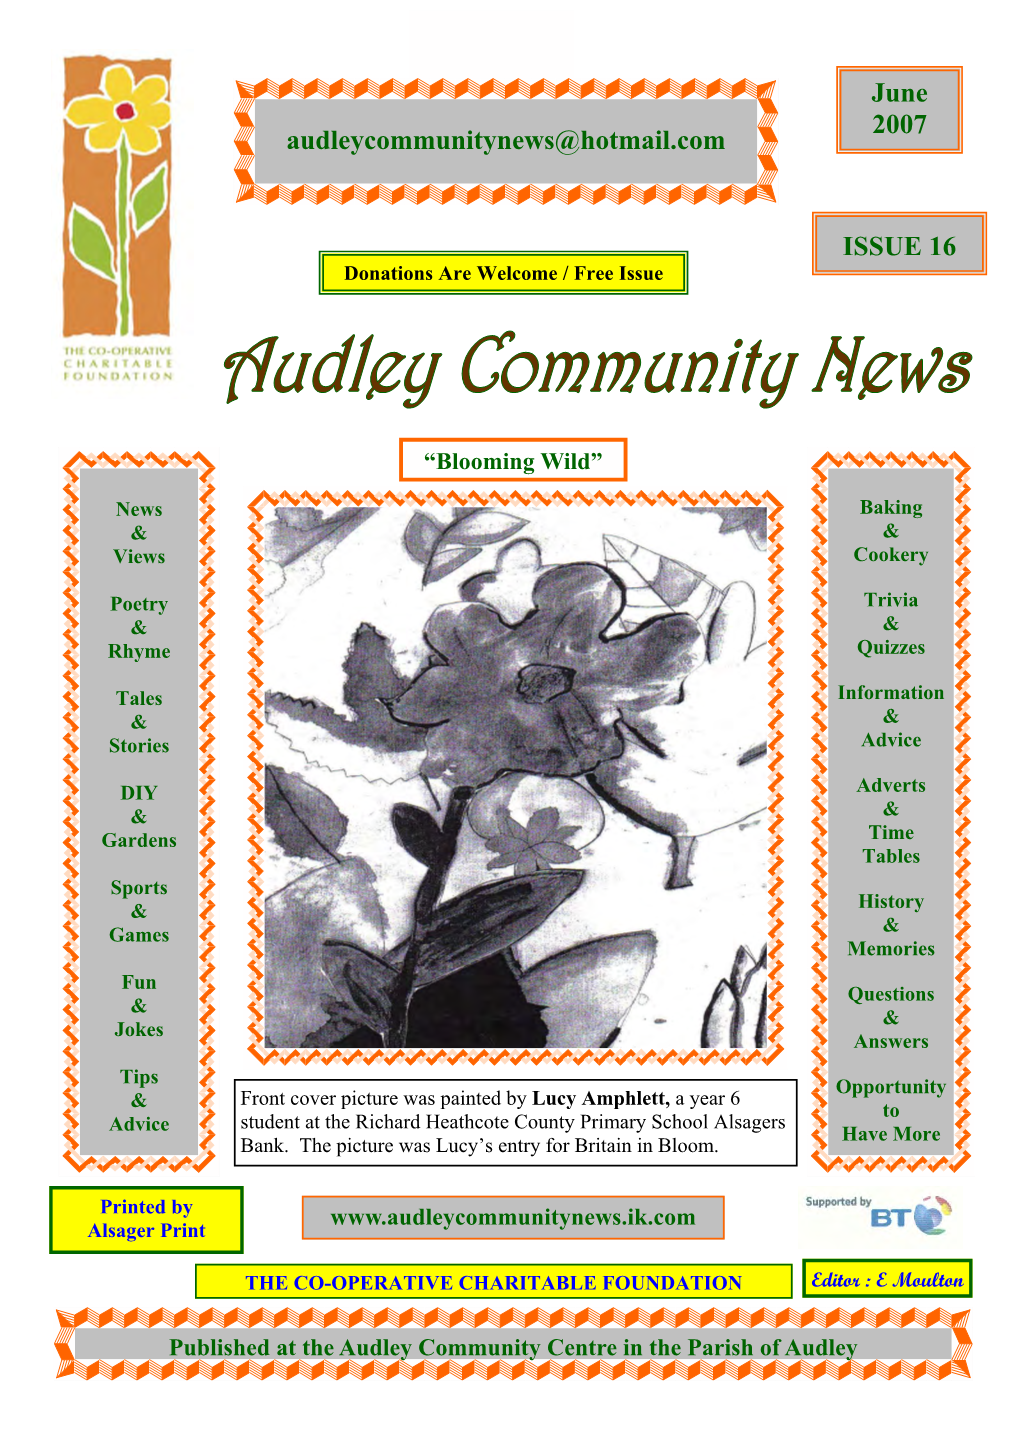 ISSUE 16 June 2007 Audleycommunitynews@Hotmail.Com